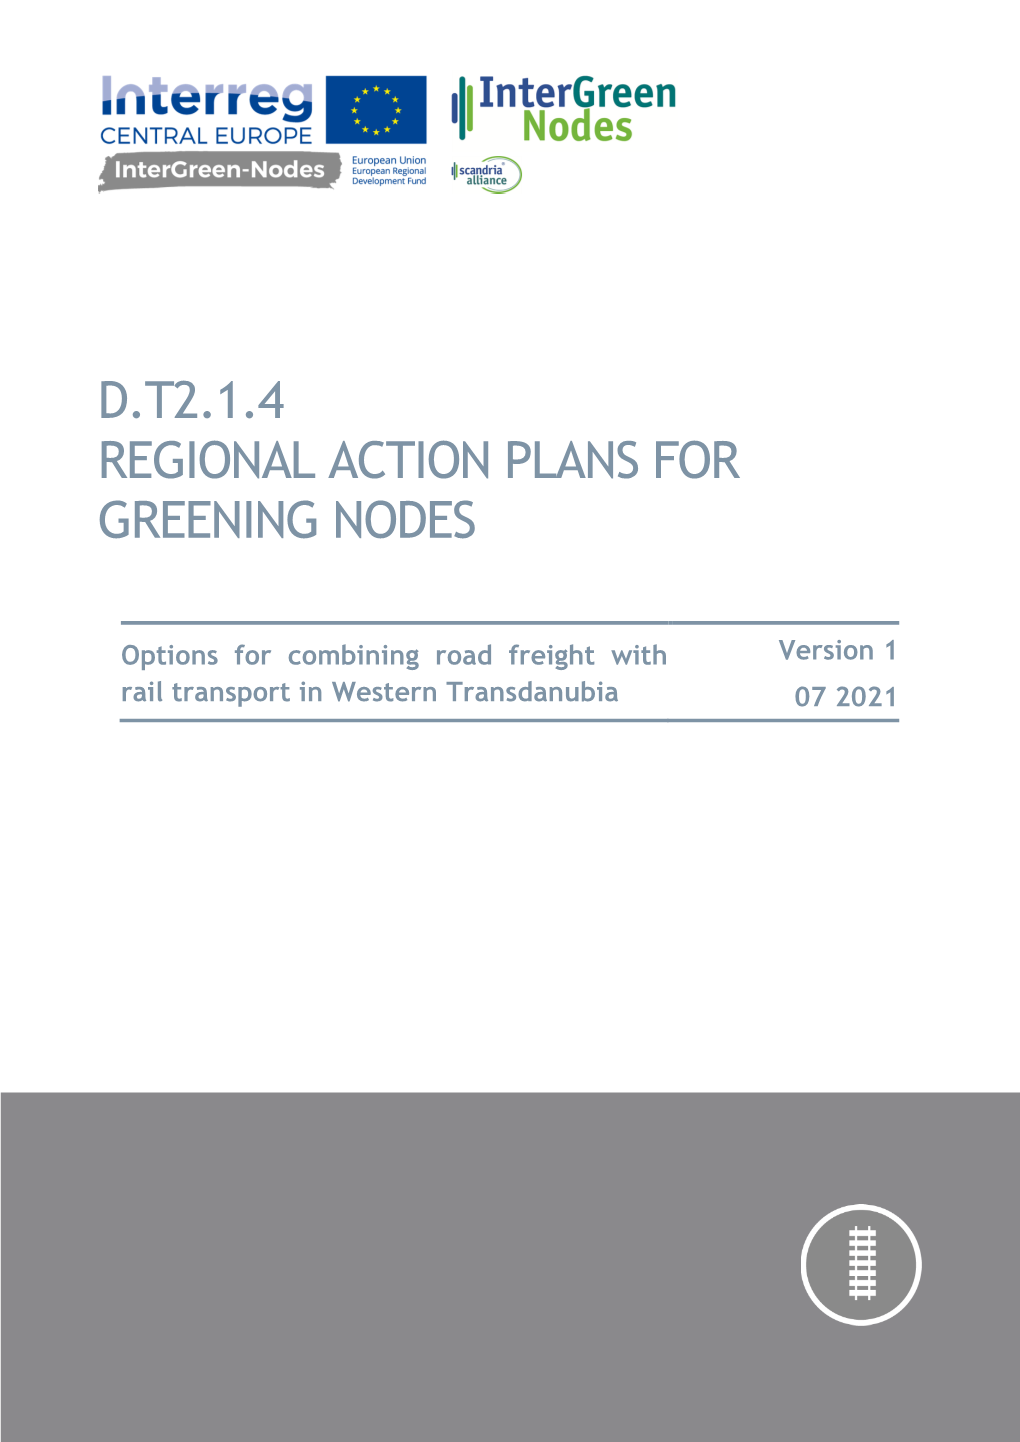 D.T2.1.4 Regional Action Plans for Greening Nodes